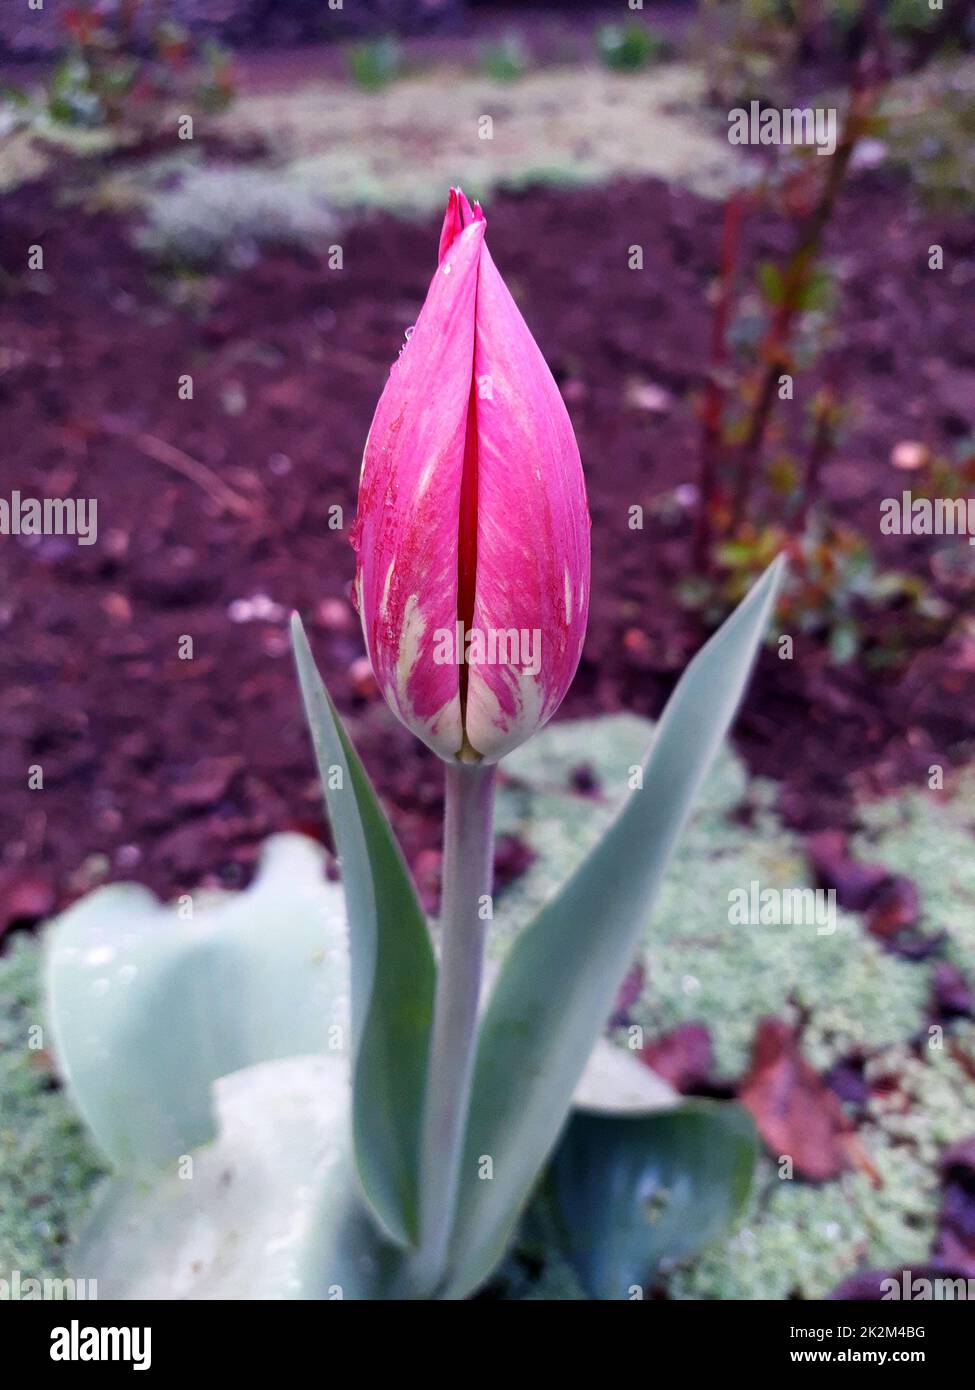 Tulip flower close-up Stock Photo